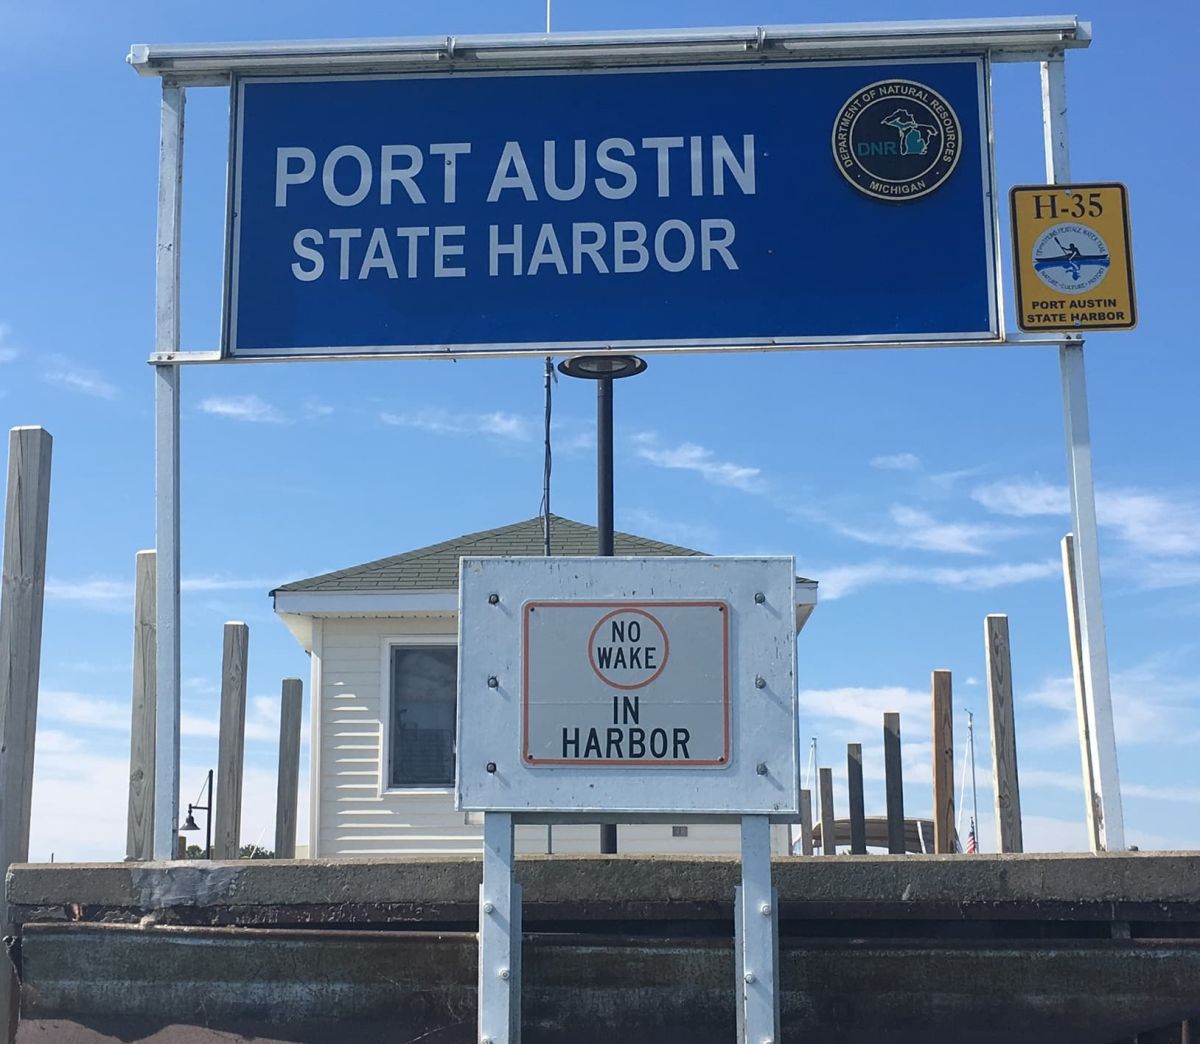 Port Austin State Harbor